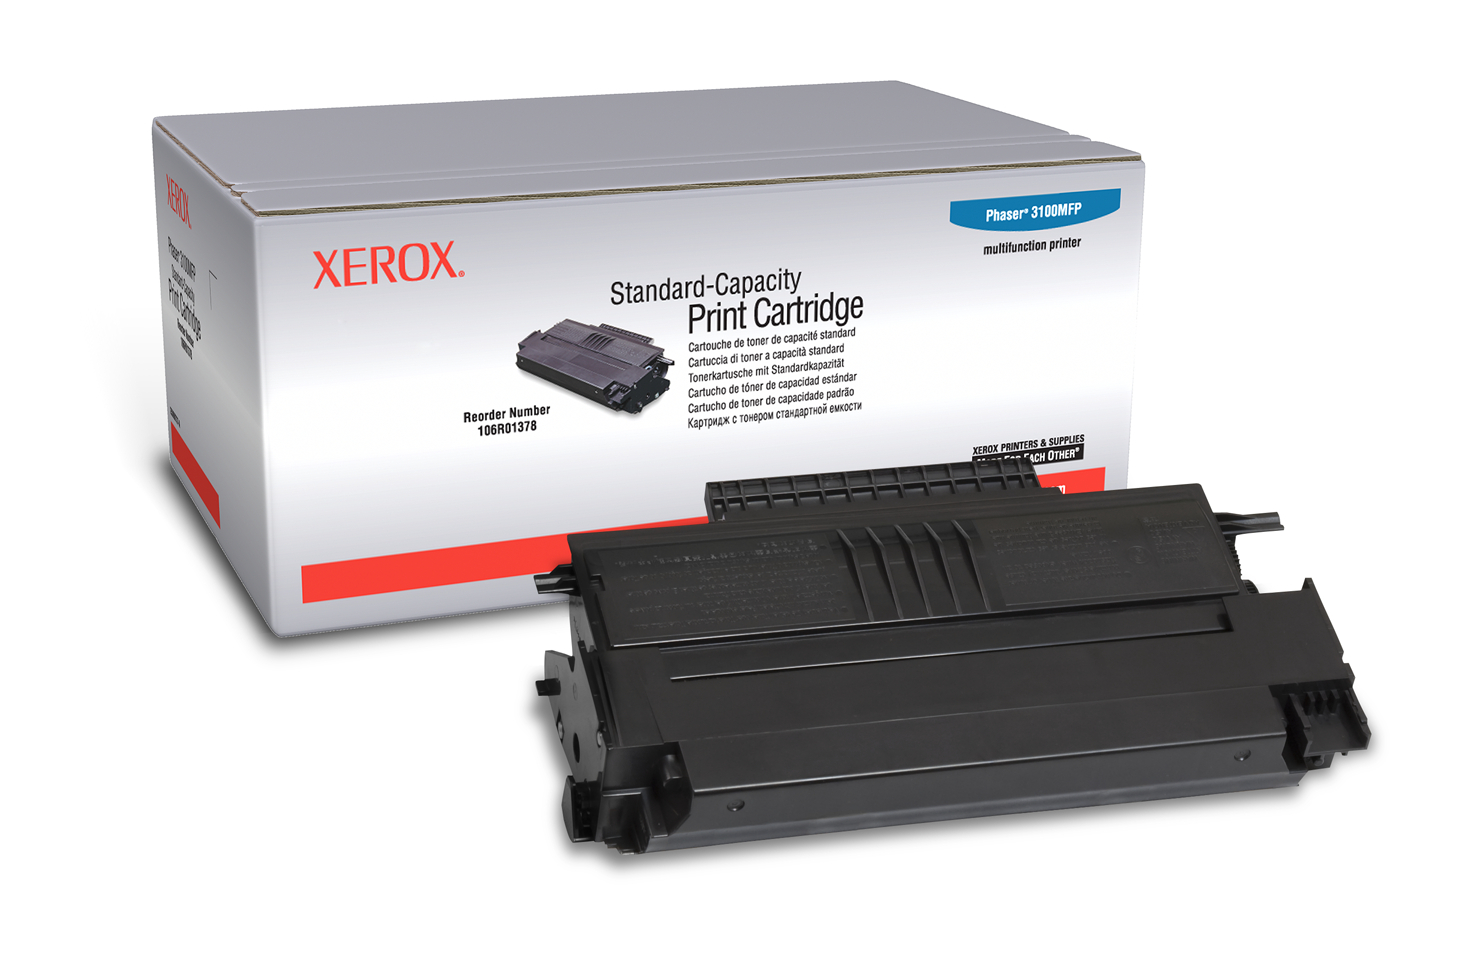 Standard-Capacity Print Cartridge (2.2K), Phaser 3100Mfp ...